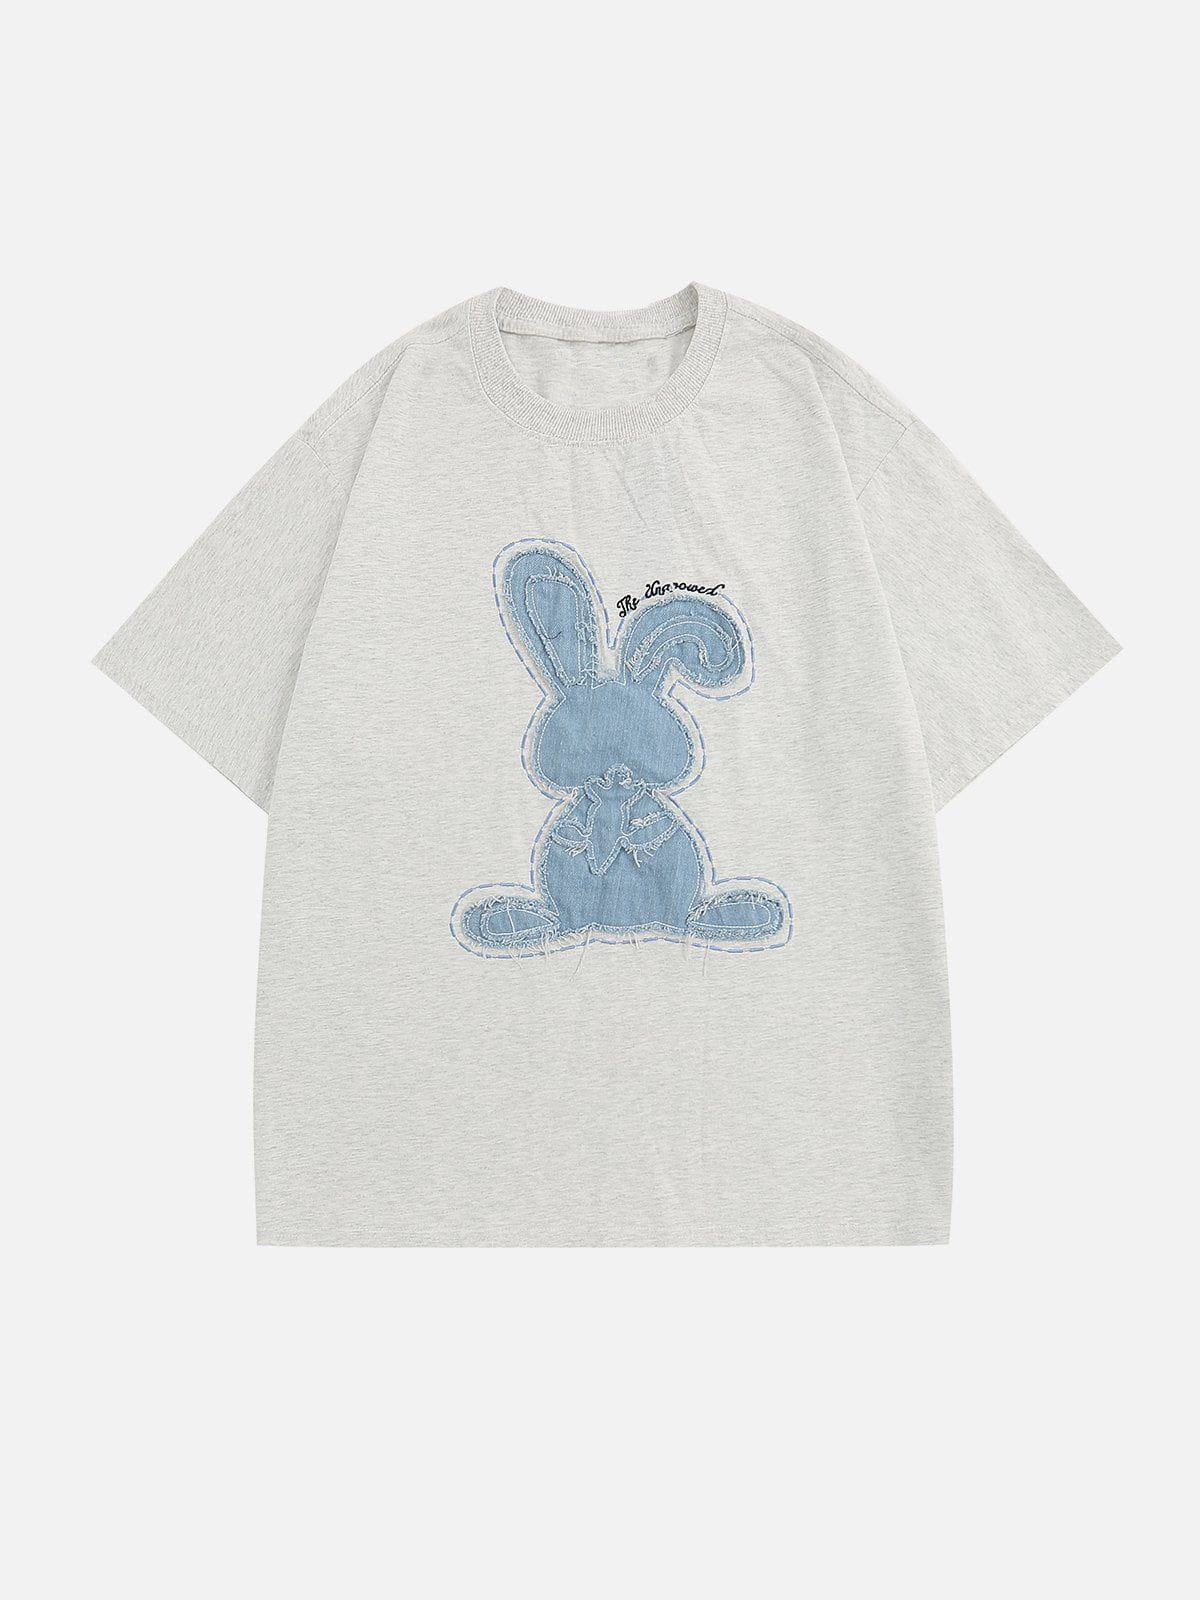 Sneakerland™ - Applique Embroidery Denim Rabbit Tee